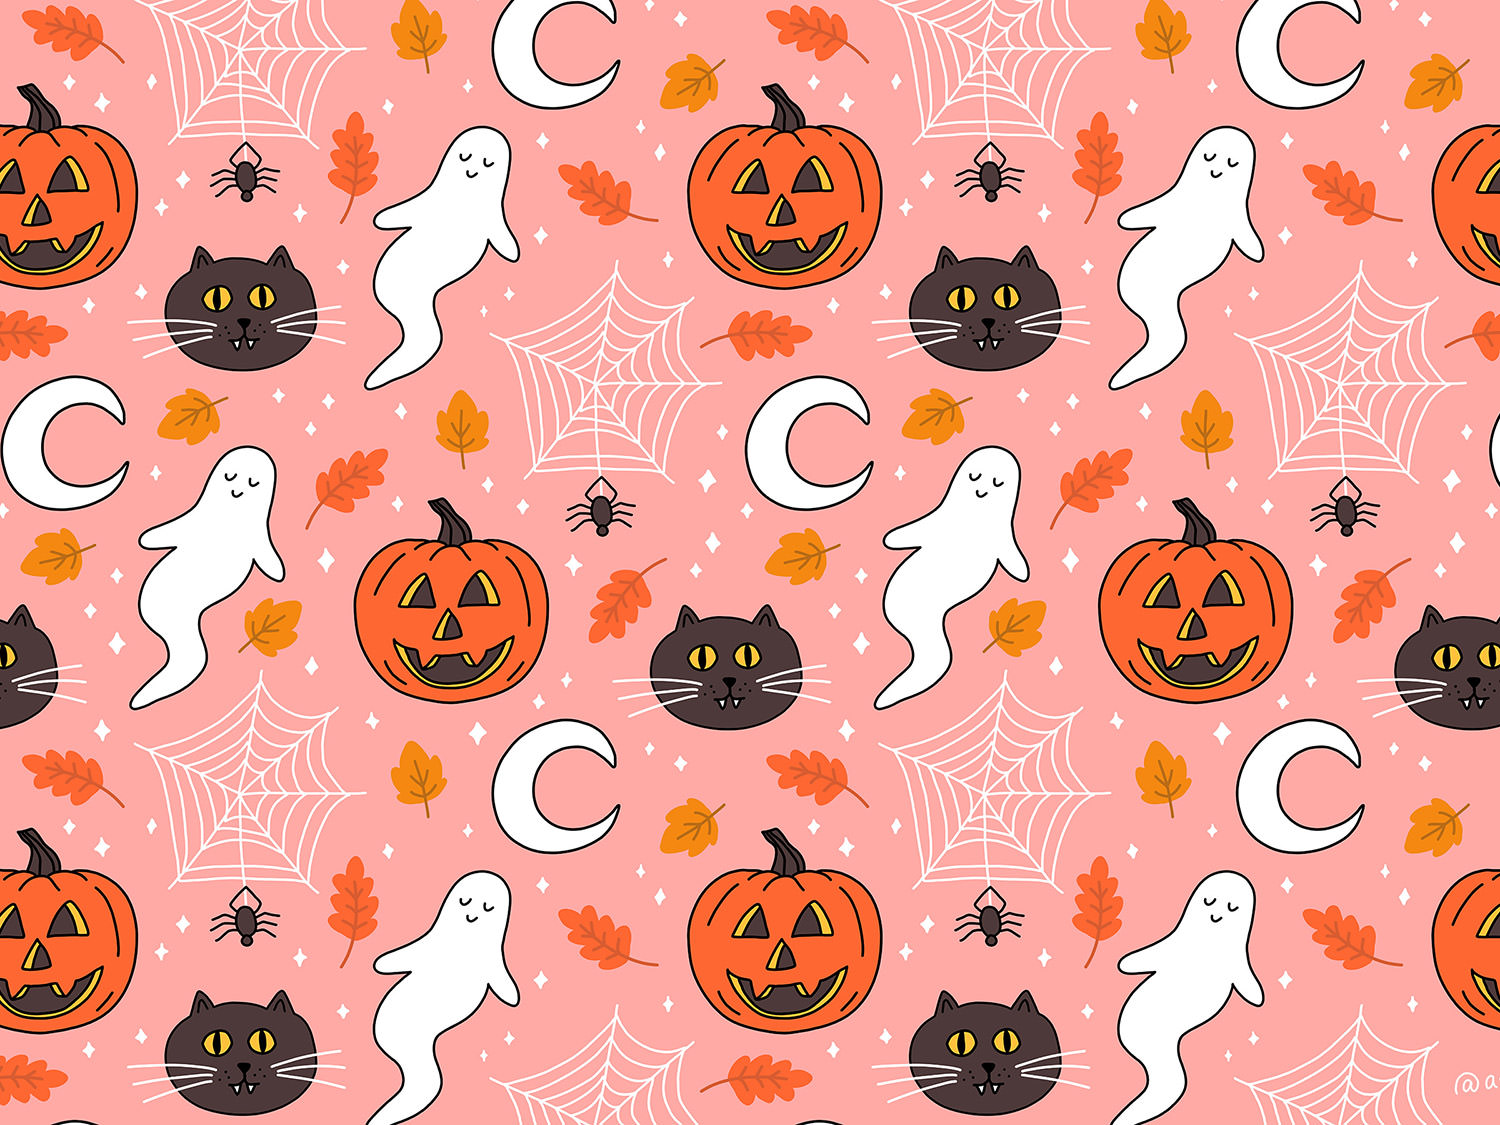 41500 Cute Halloween Background Illustrations RoyaltyFree Vector  Graphics  Clip Art  iStock  Trick or treat Halloween party